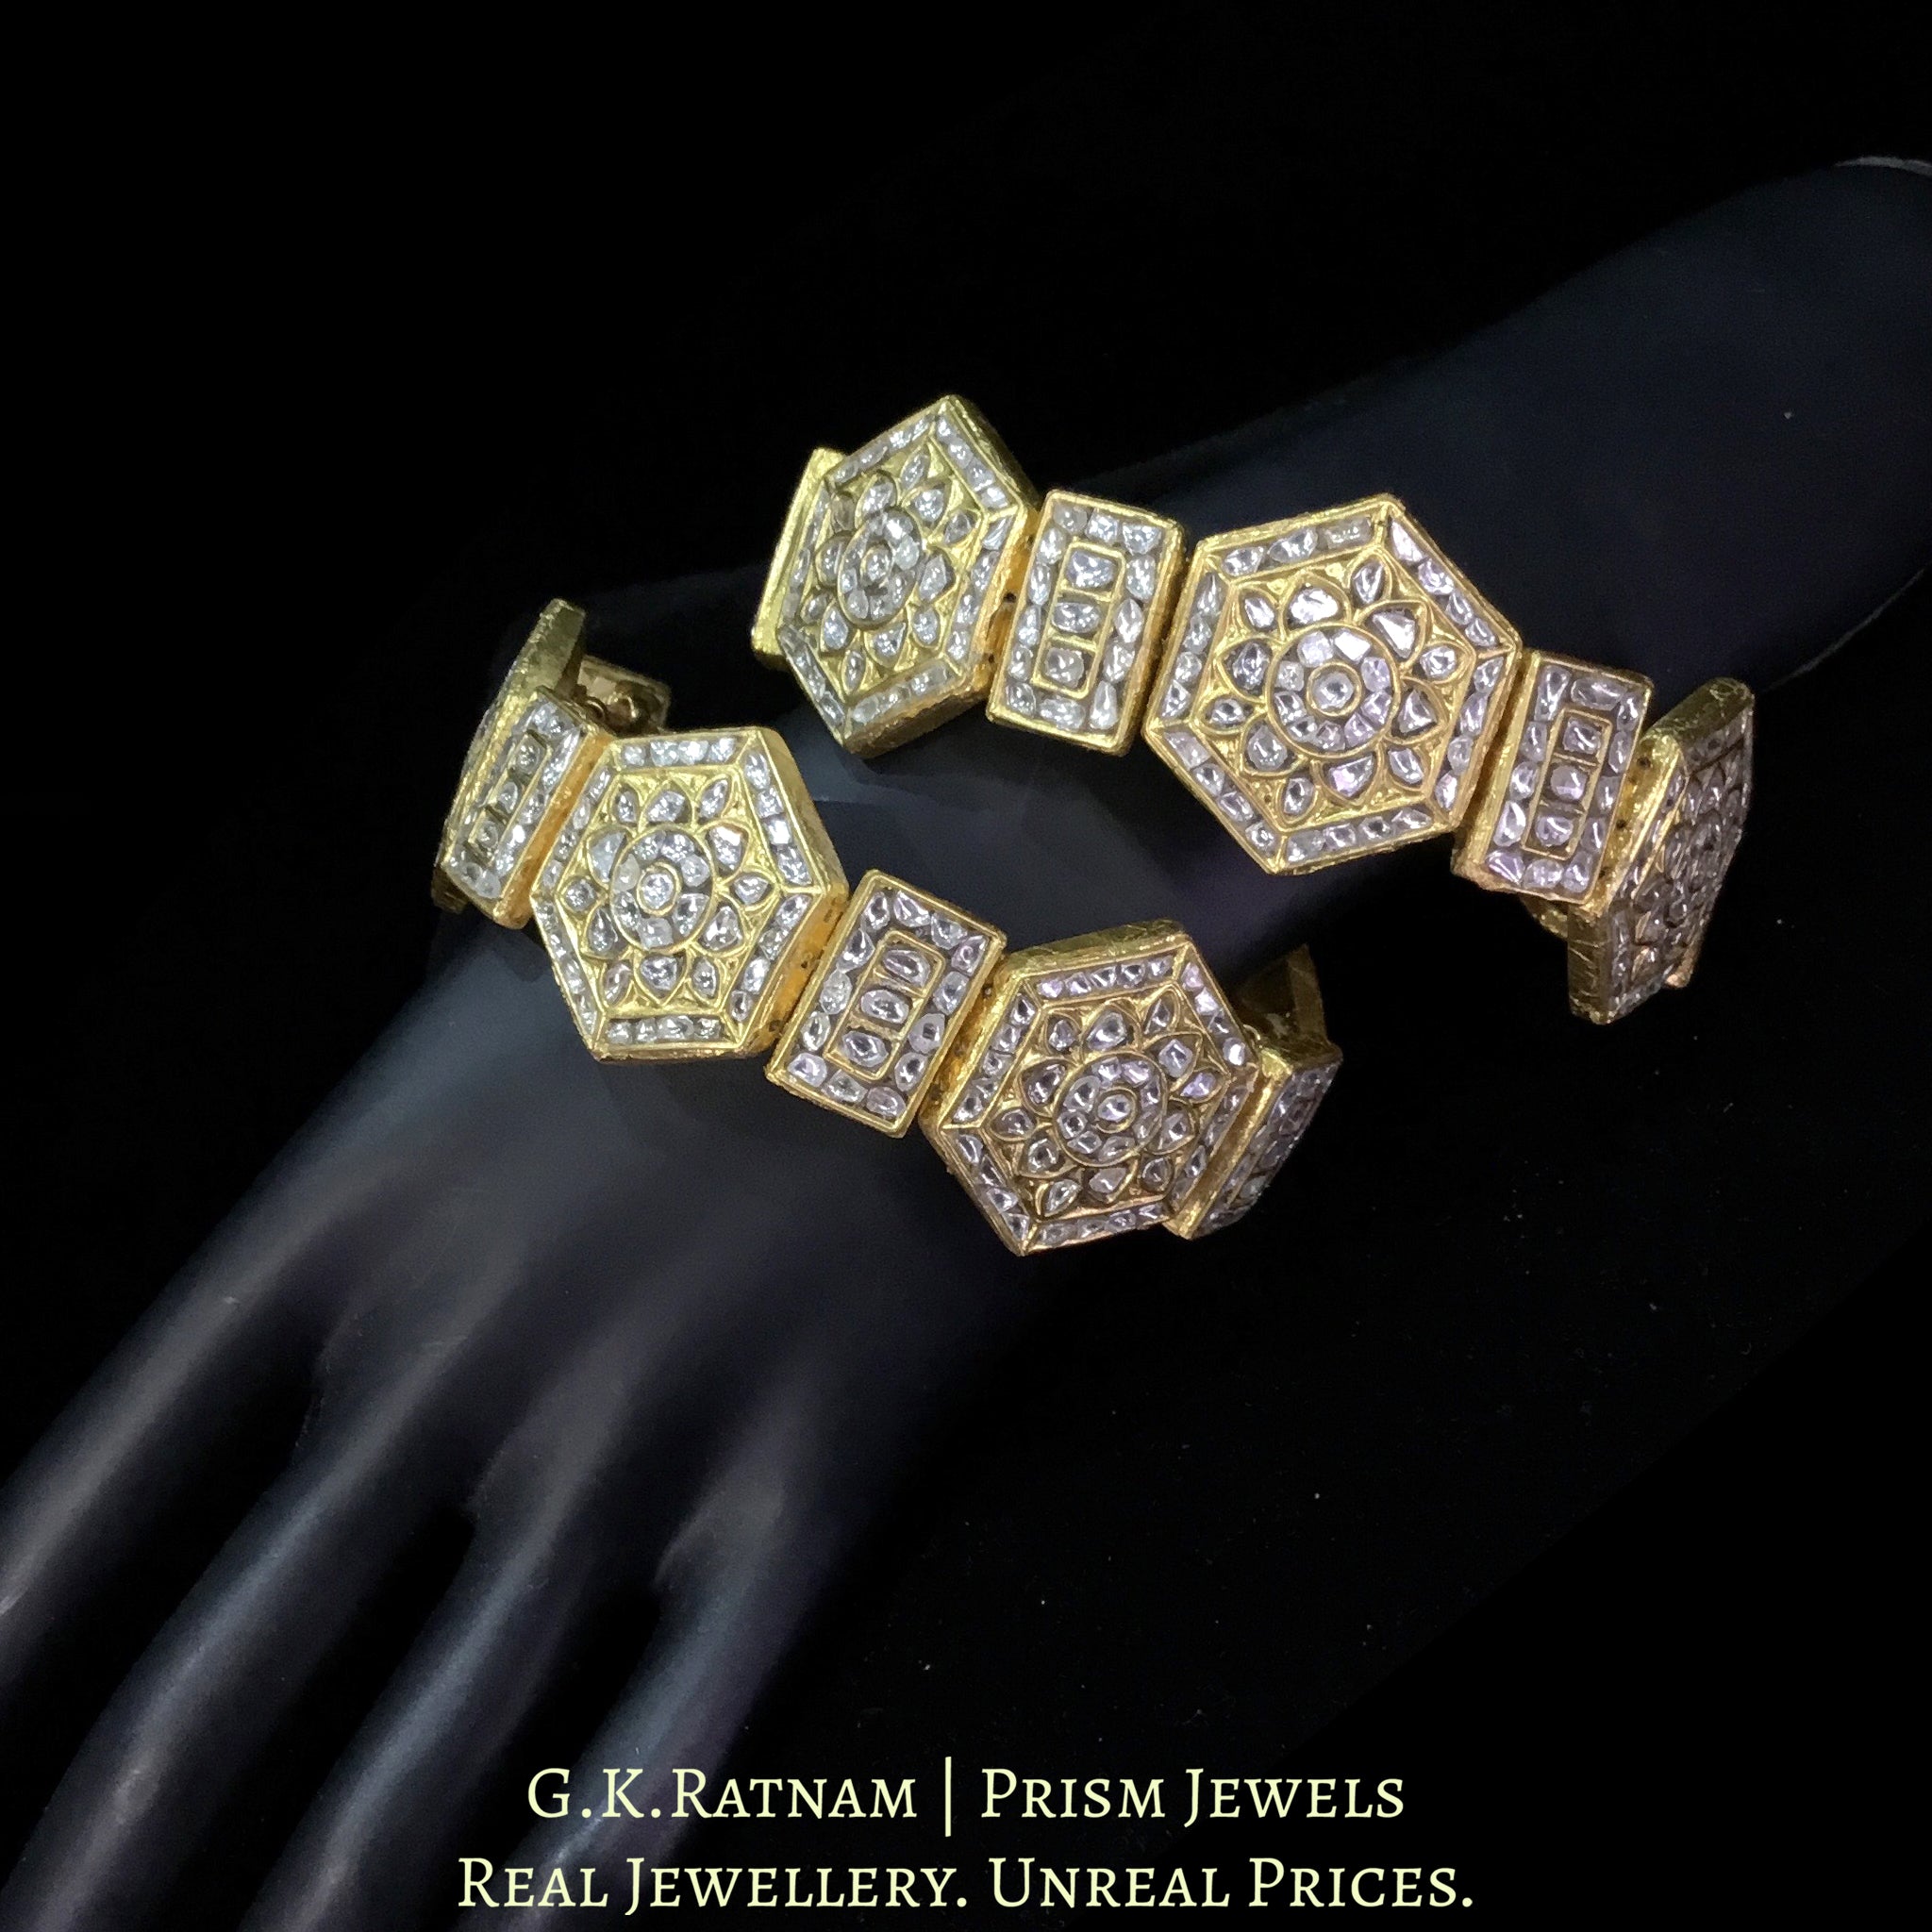 23k Gold and Diamond Polki Bracelet Pair (Paunchi / Ponchi) with Hexagonal Motifs